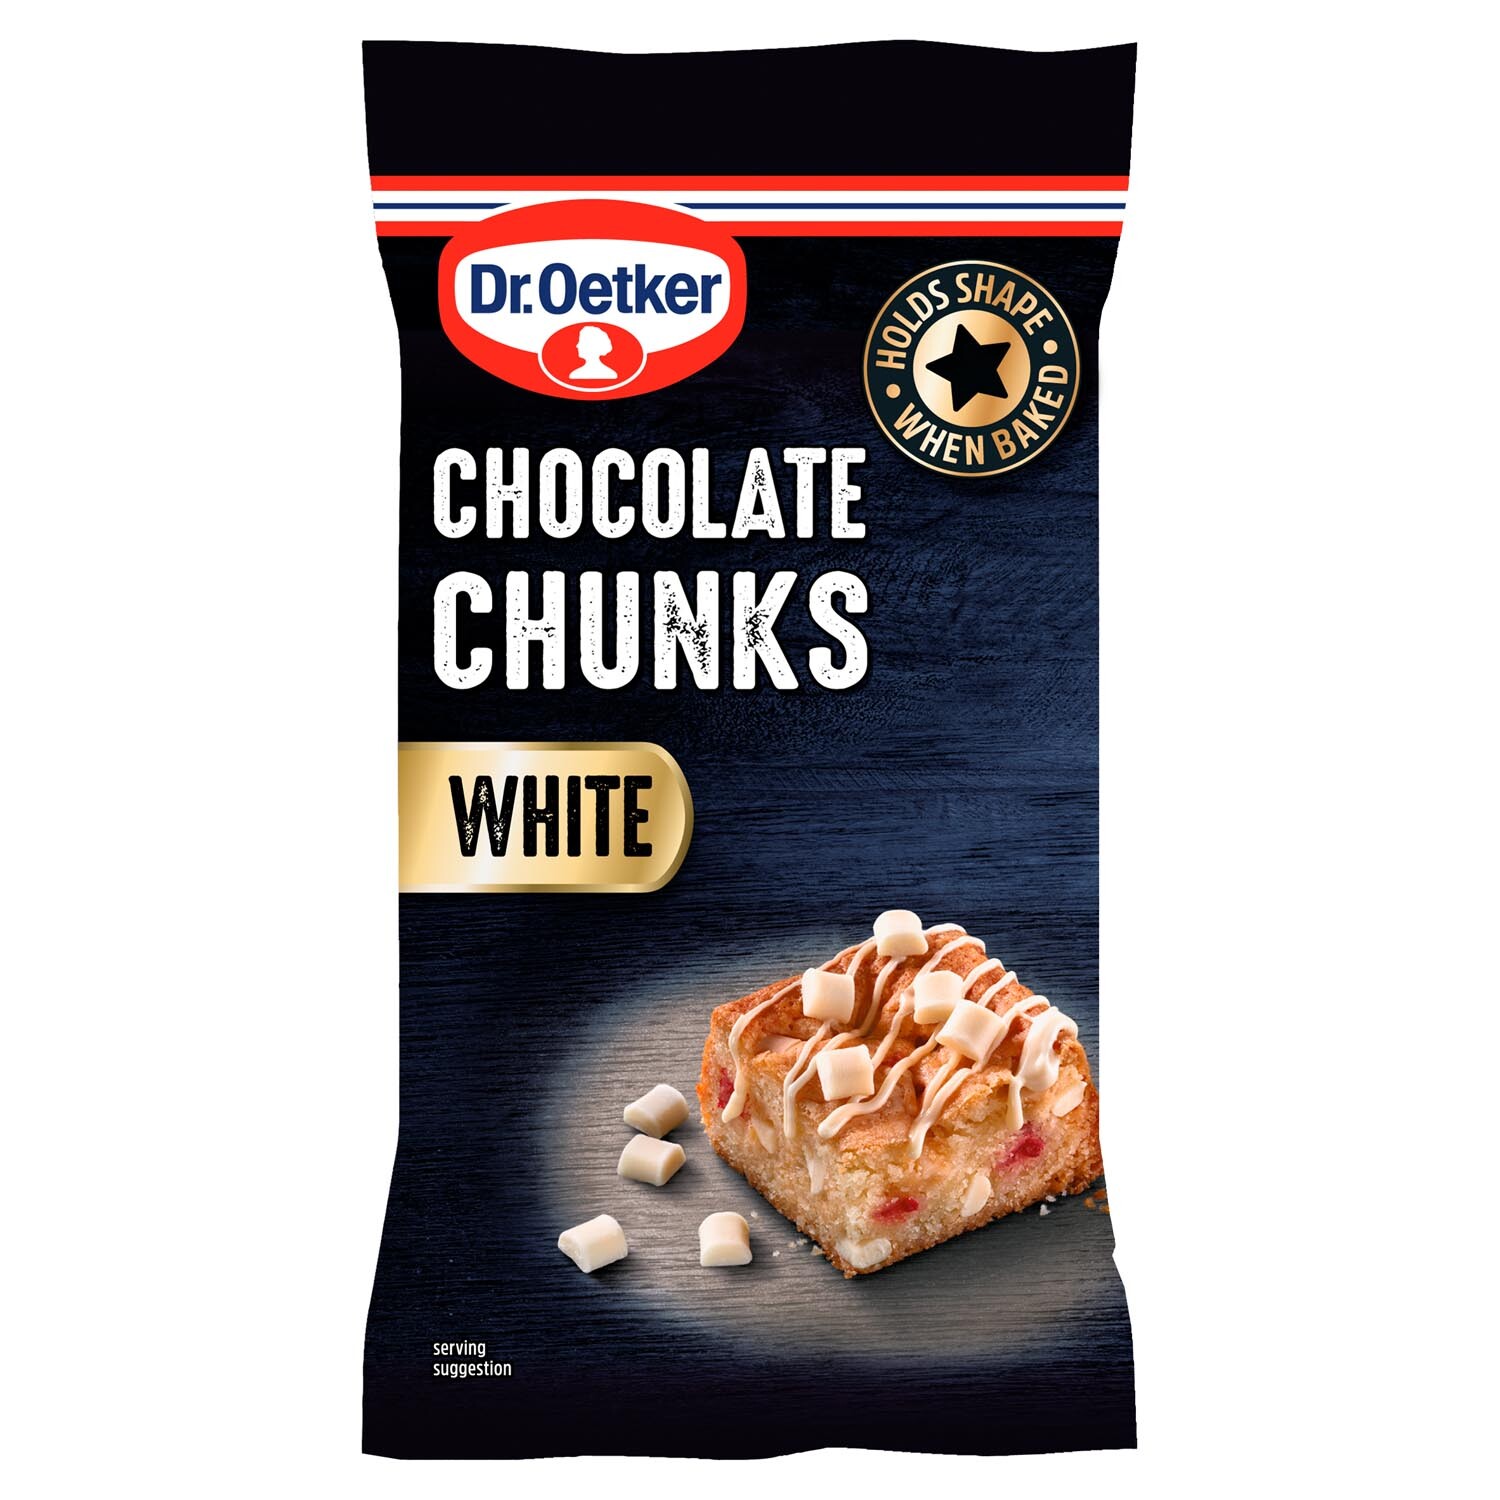 Dr. Oetker Chocolate Chunks - White Chocolate Image